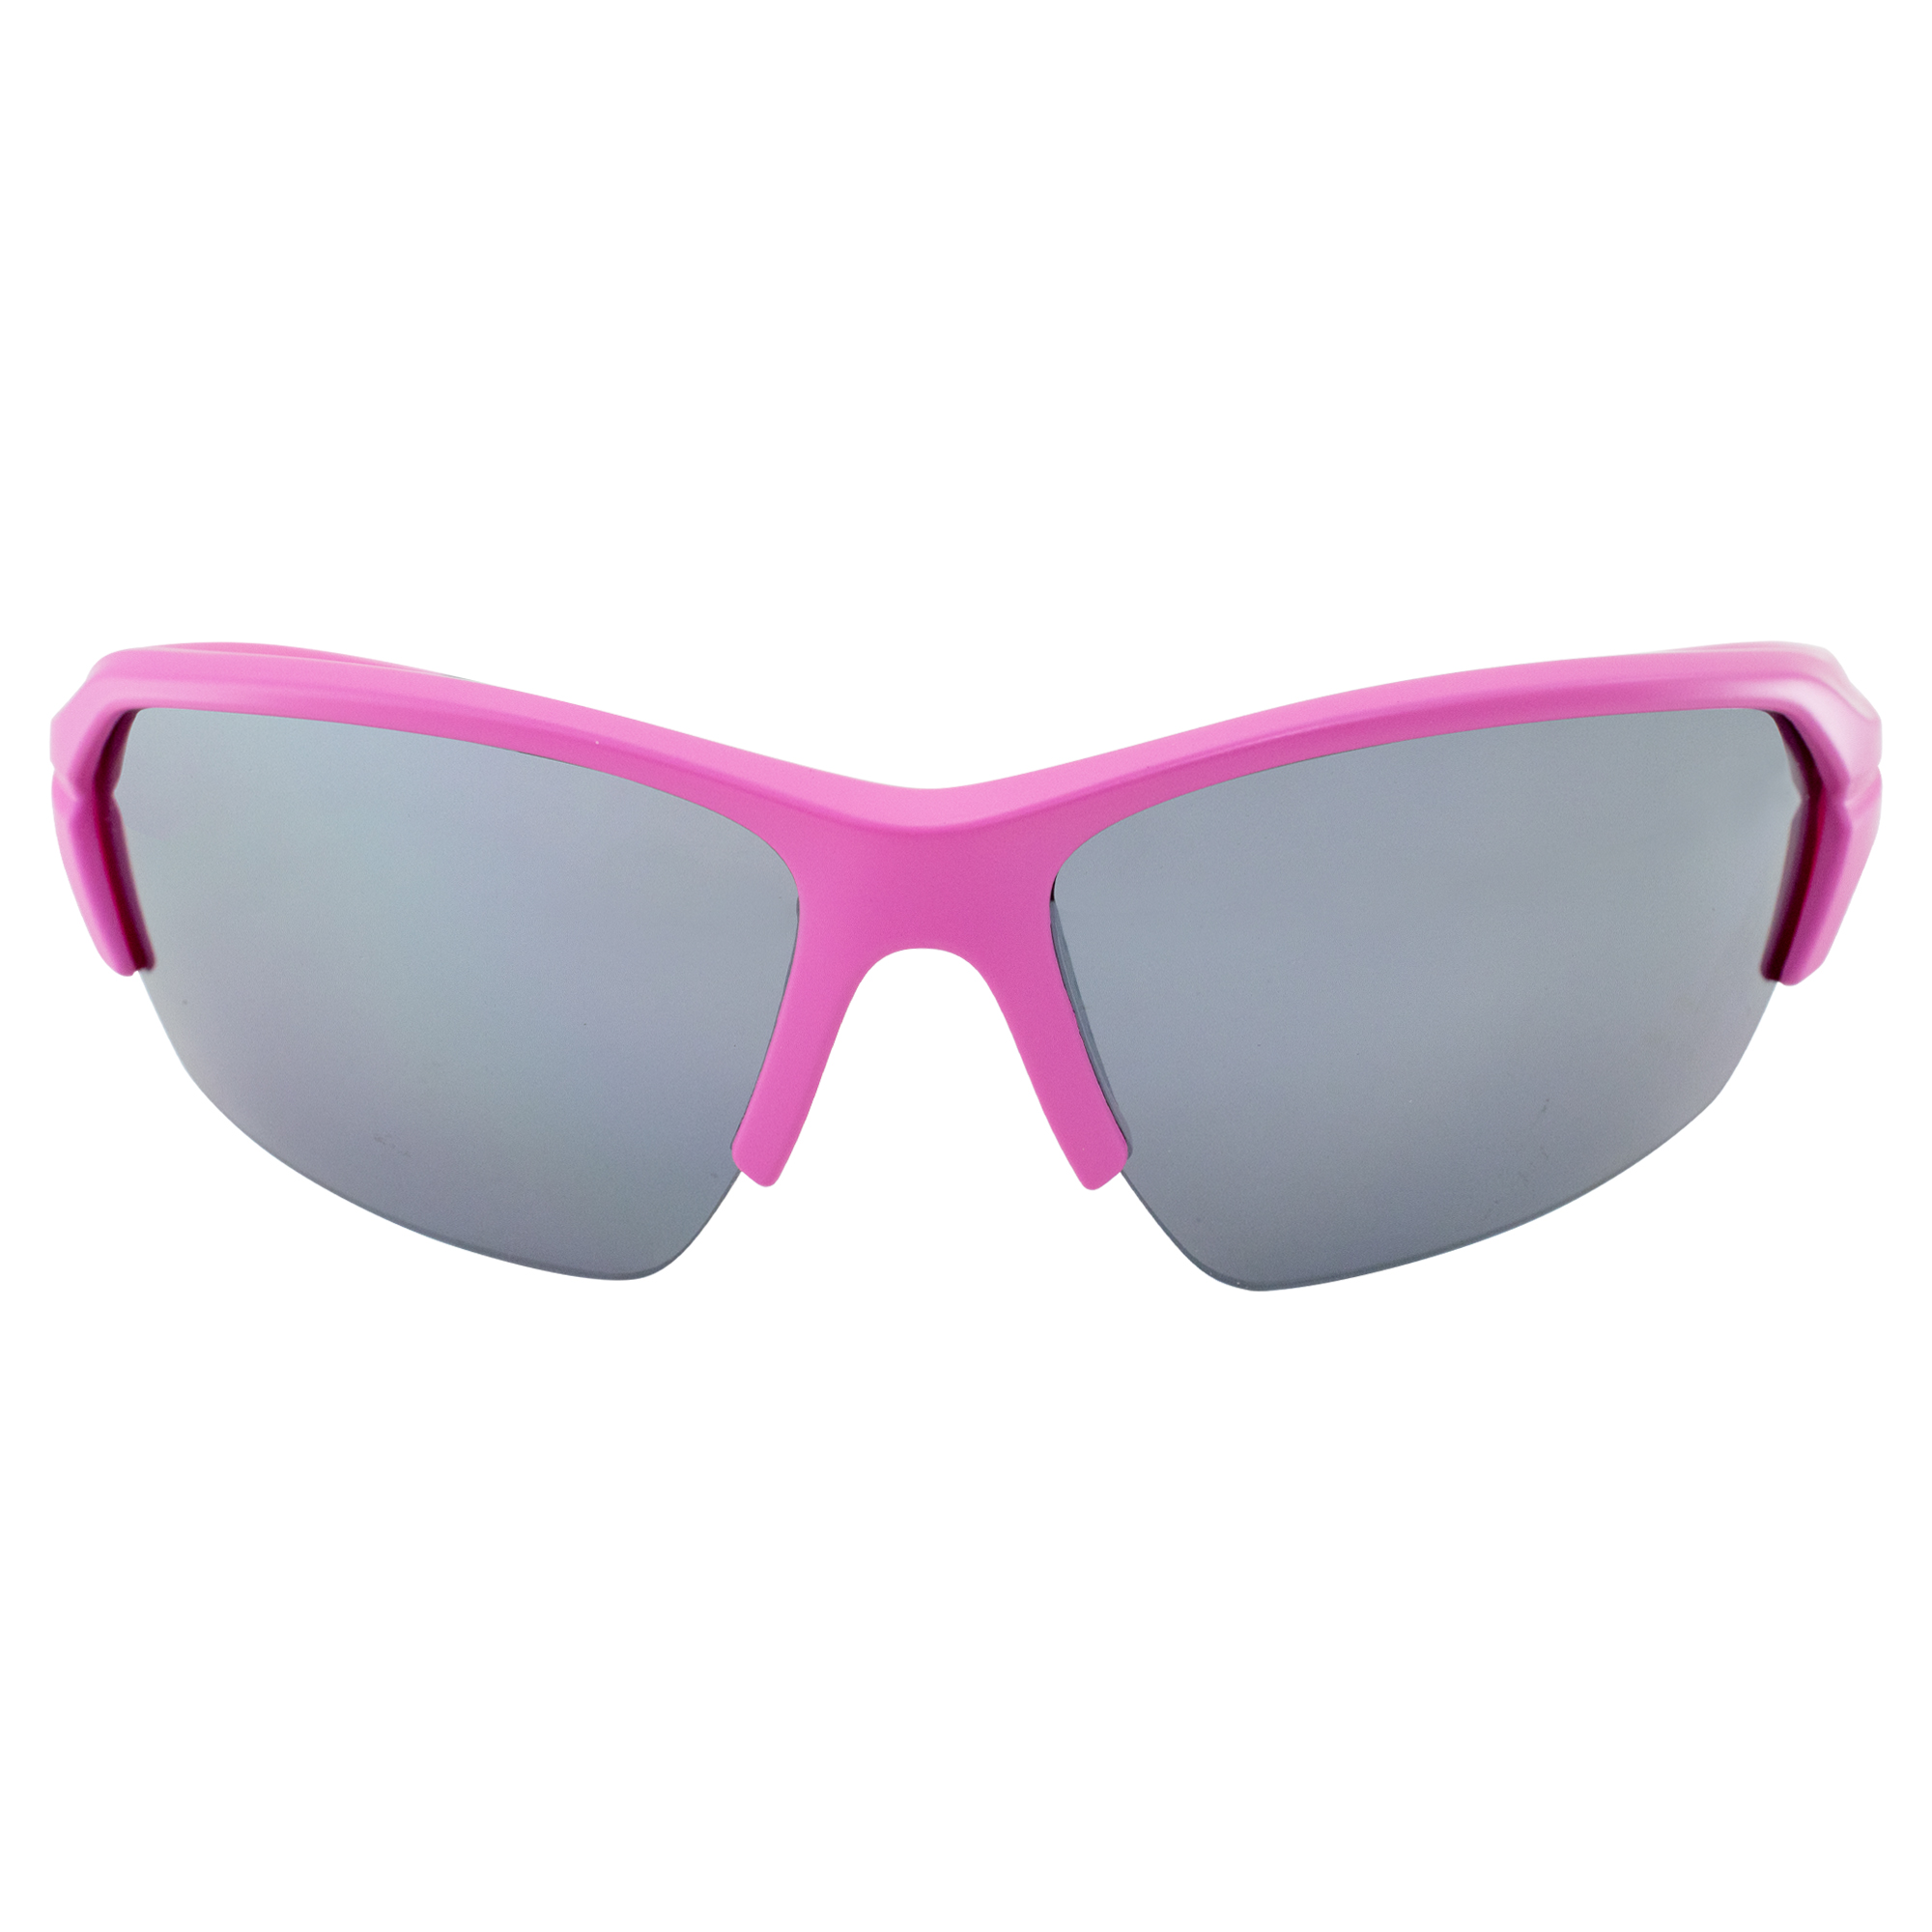 Epoch Eyewear Wake Sunglasses Style Pink with Smoke Lens - image 2 of 8